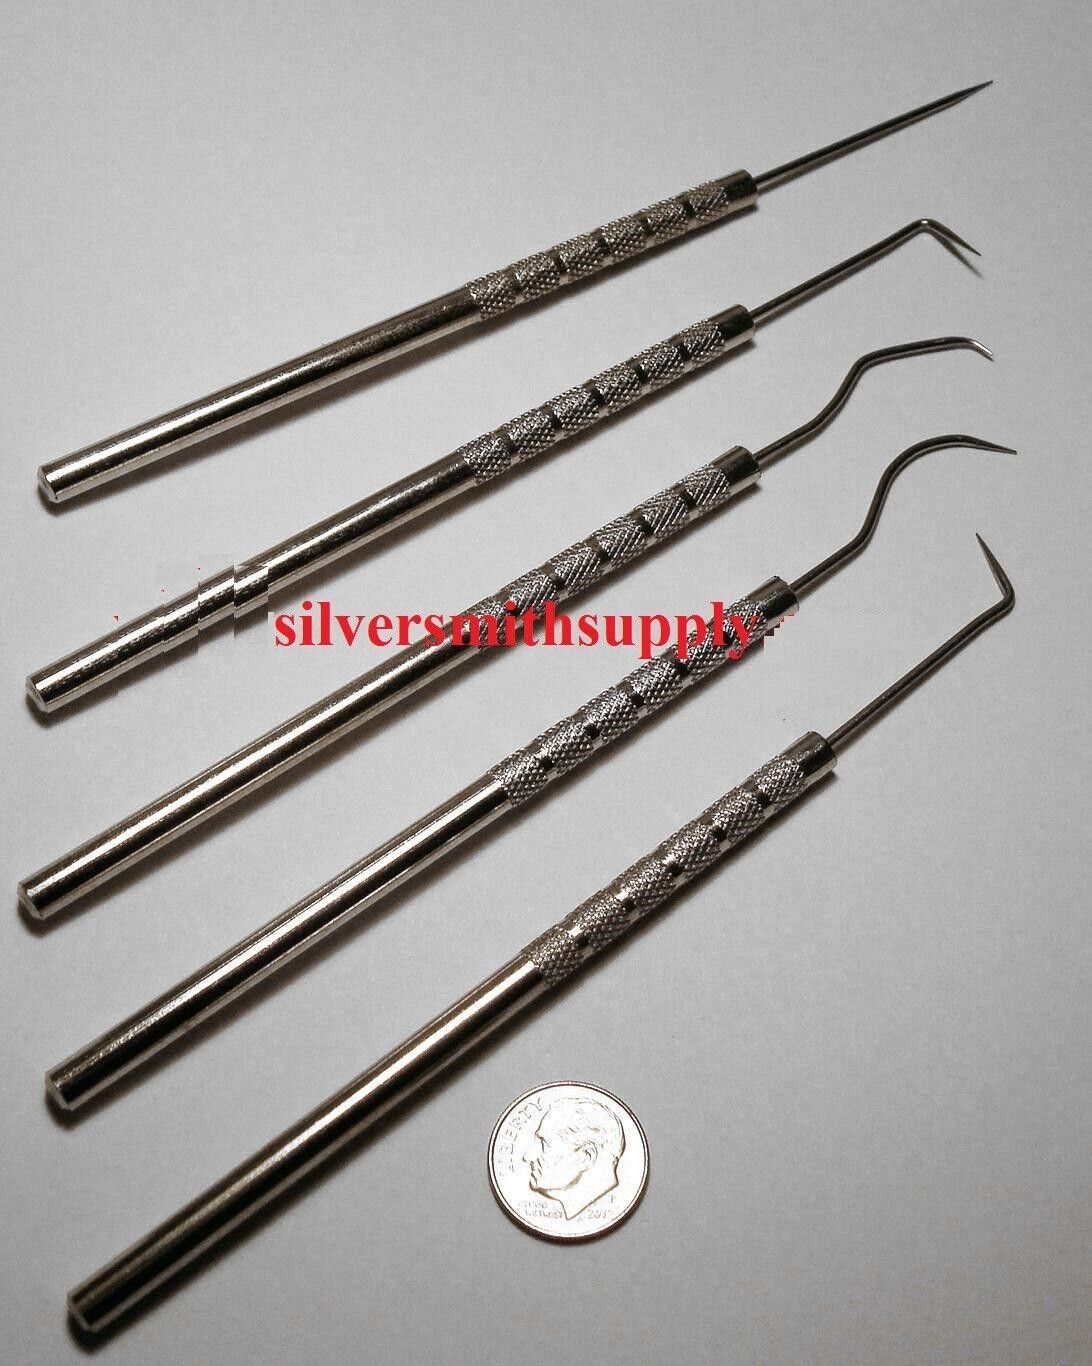 jewelers soldering tools 5 pc stainless steel pick set T048 Craft metal picks - фотография #3